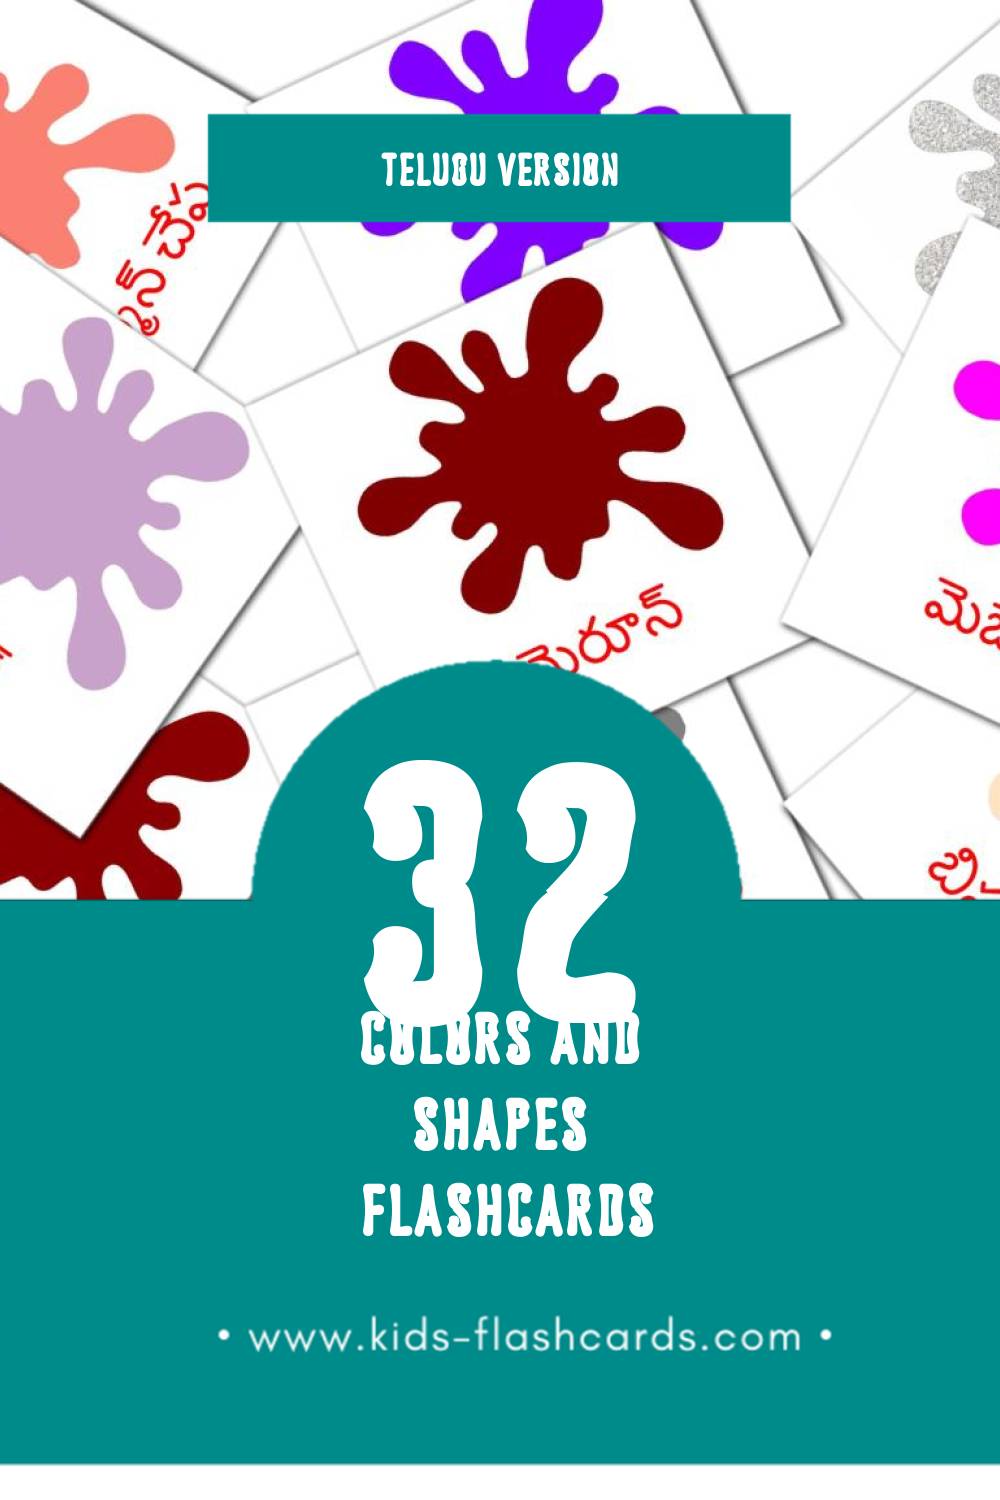 Visual రంగులు మరియు ఆకారాలు Flashcards for Toddlers (32 cards in Telugu)